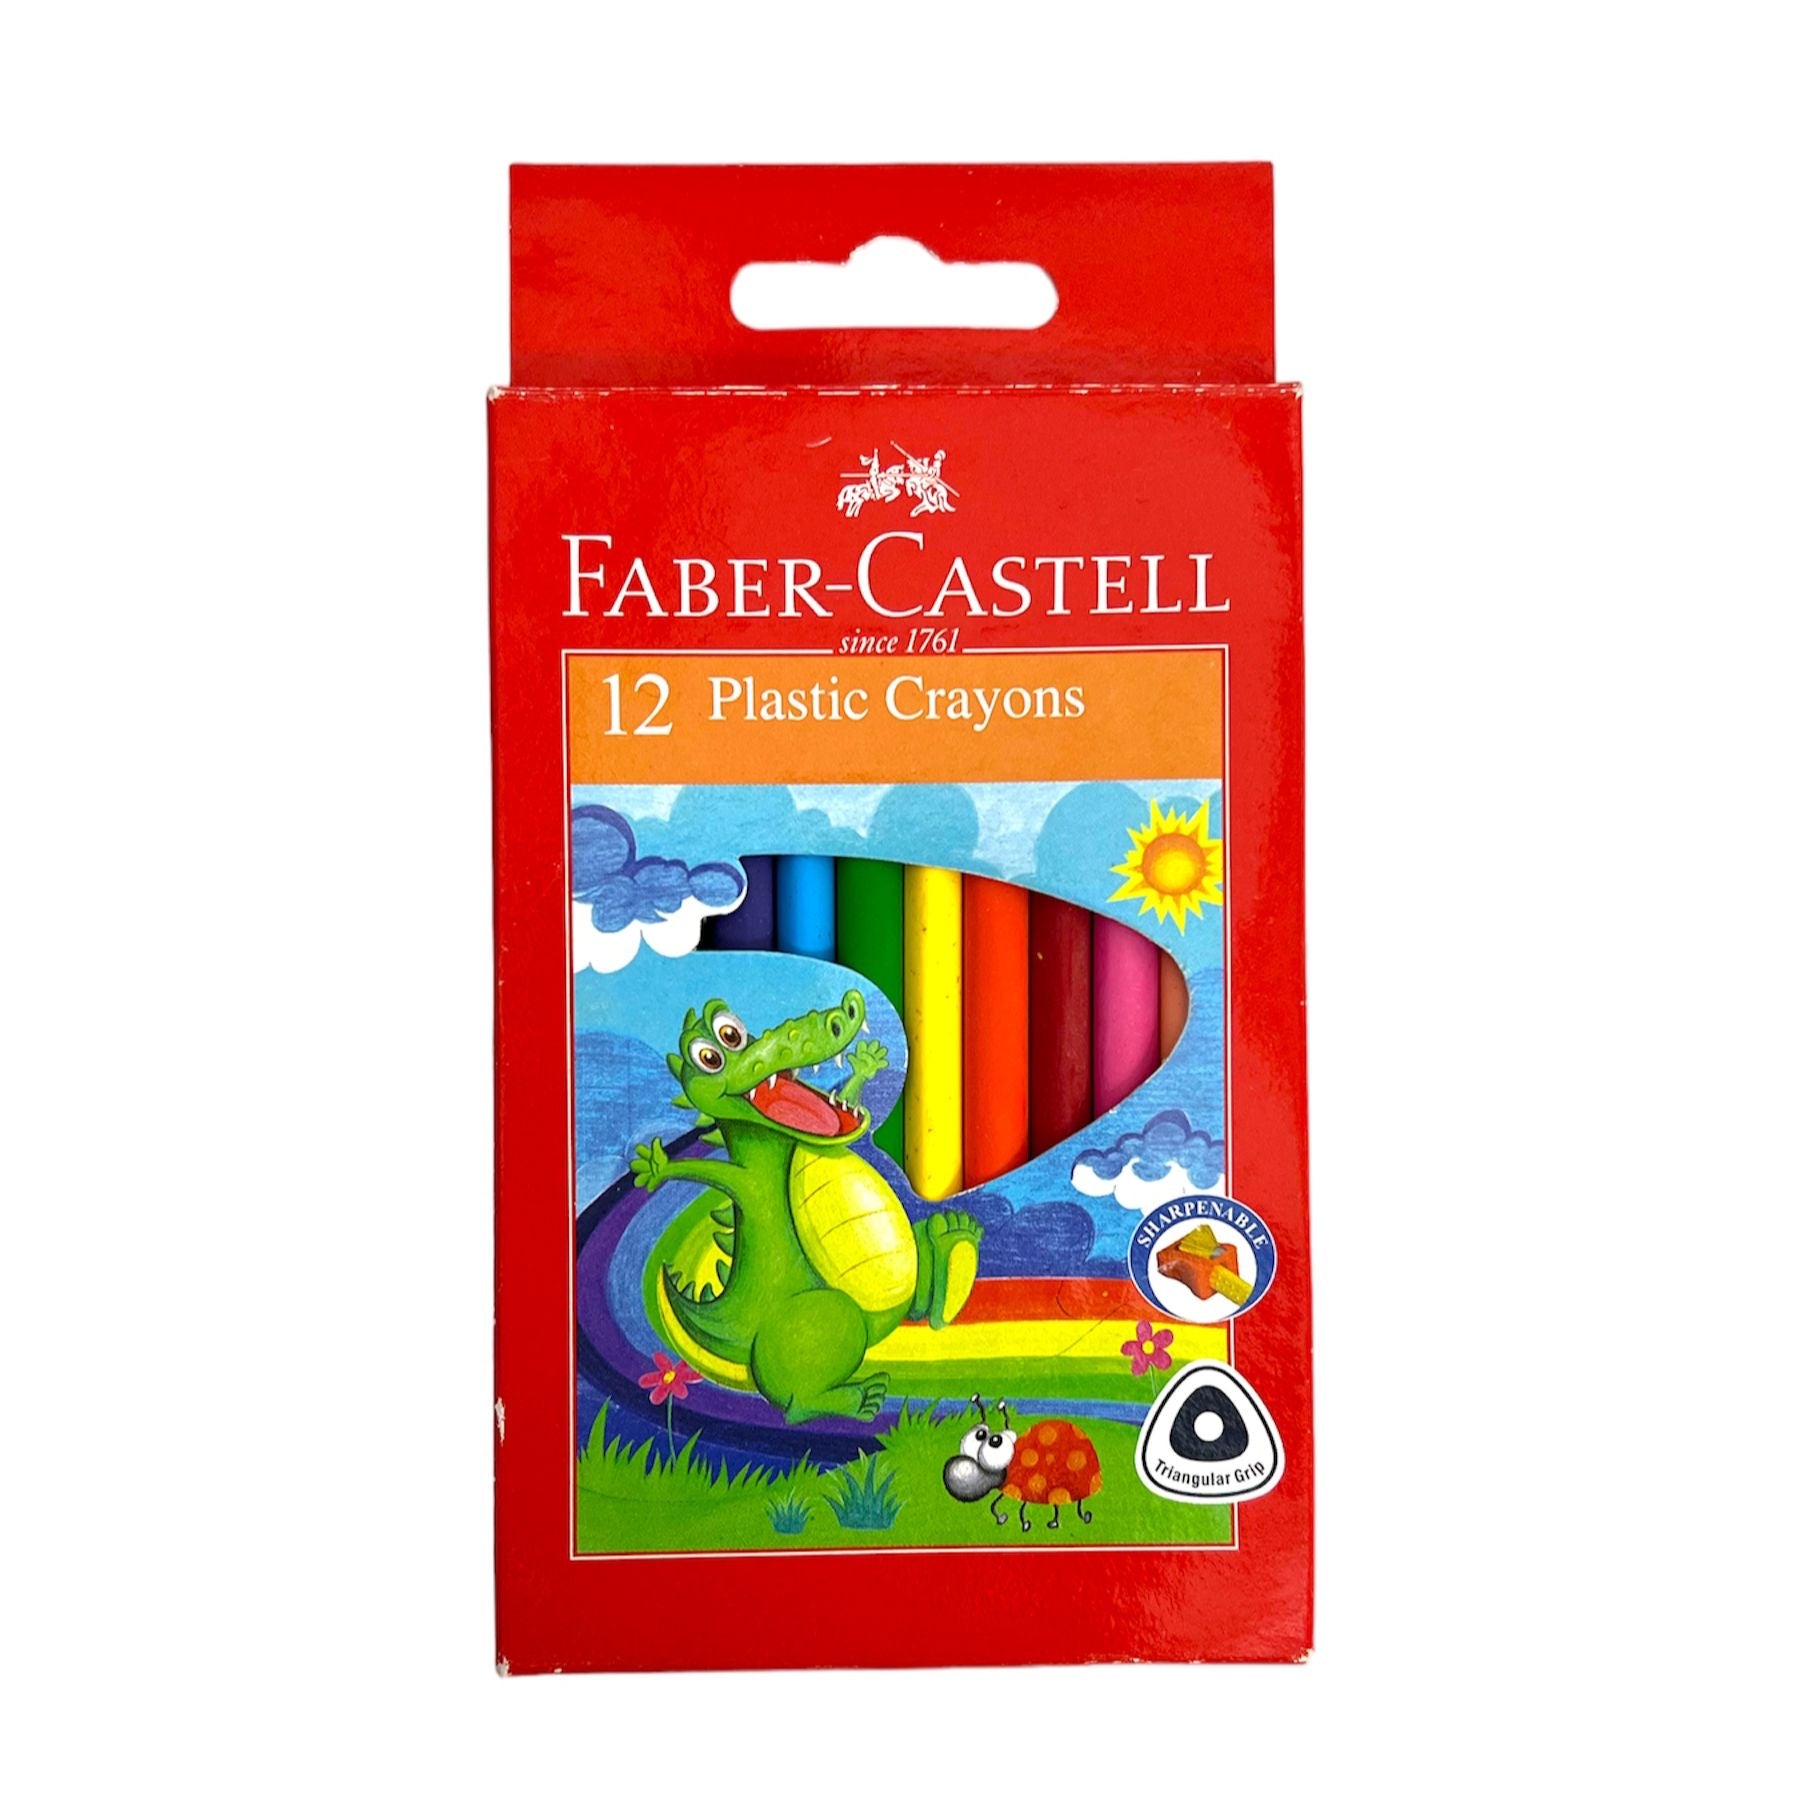 Faber Castell 12 Plastic Crayons || الوان كرايون بلاستيك فيبر كاستل 